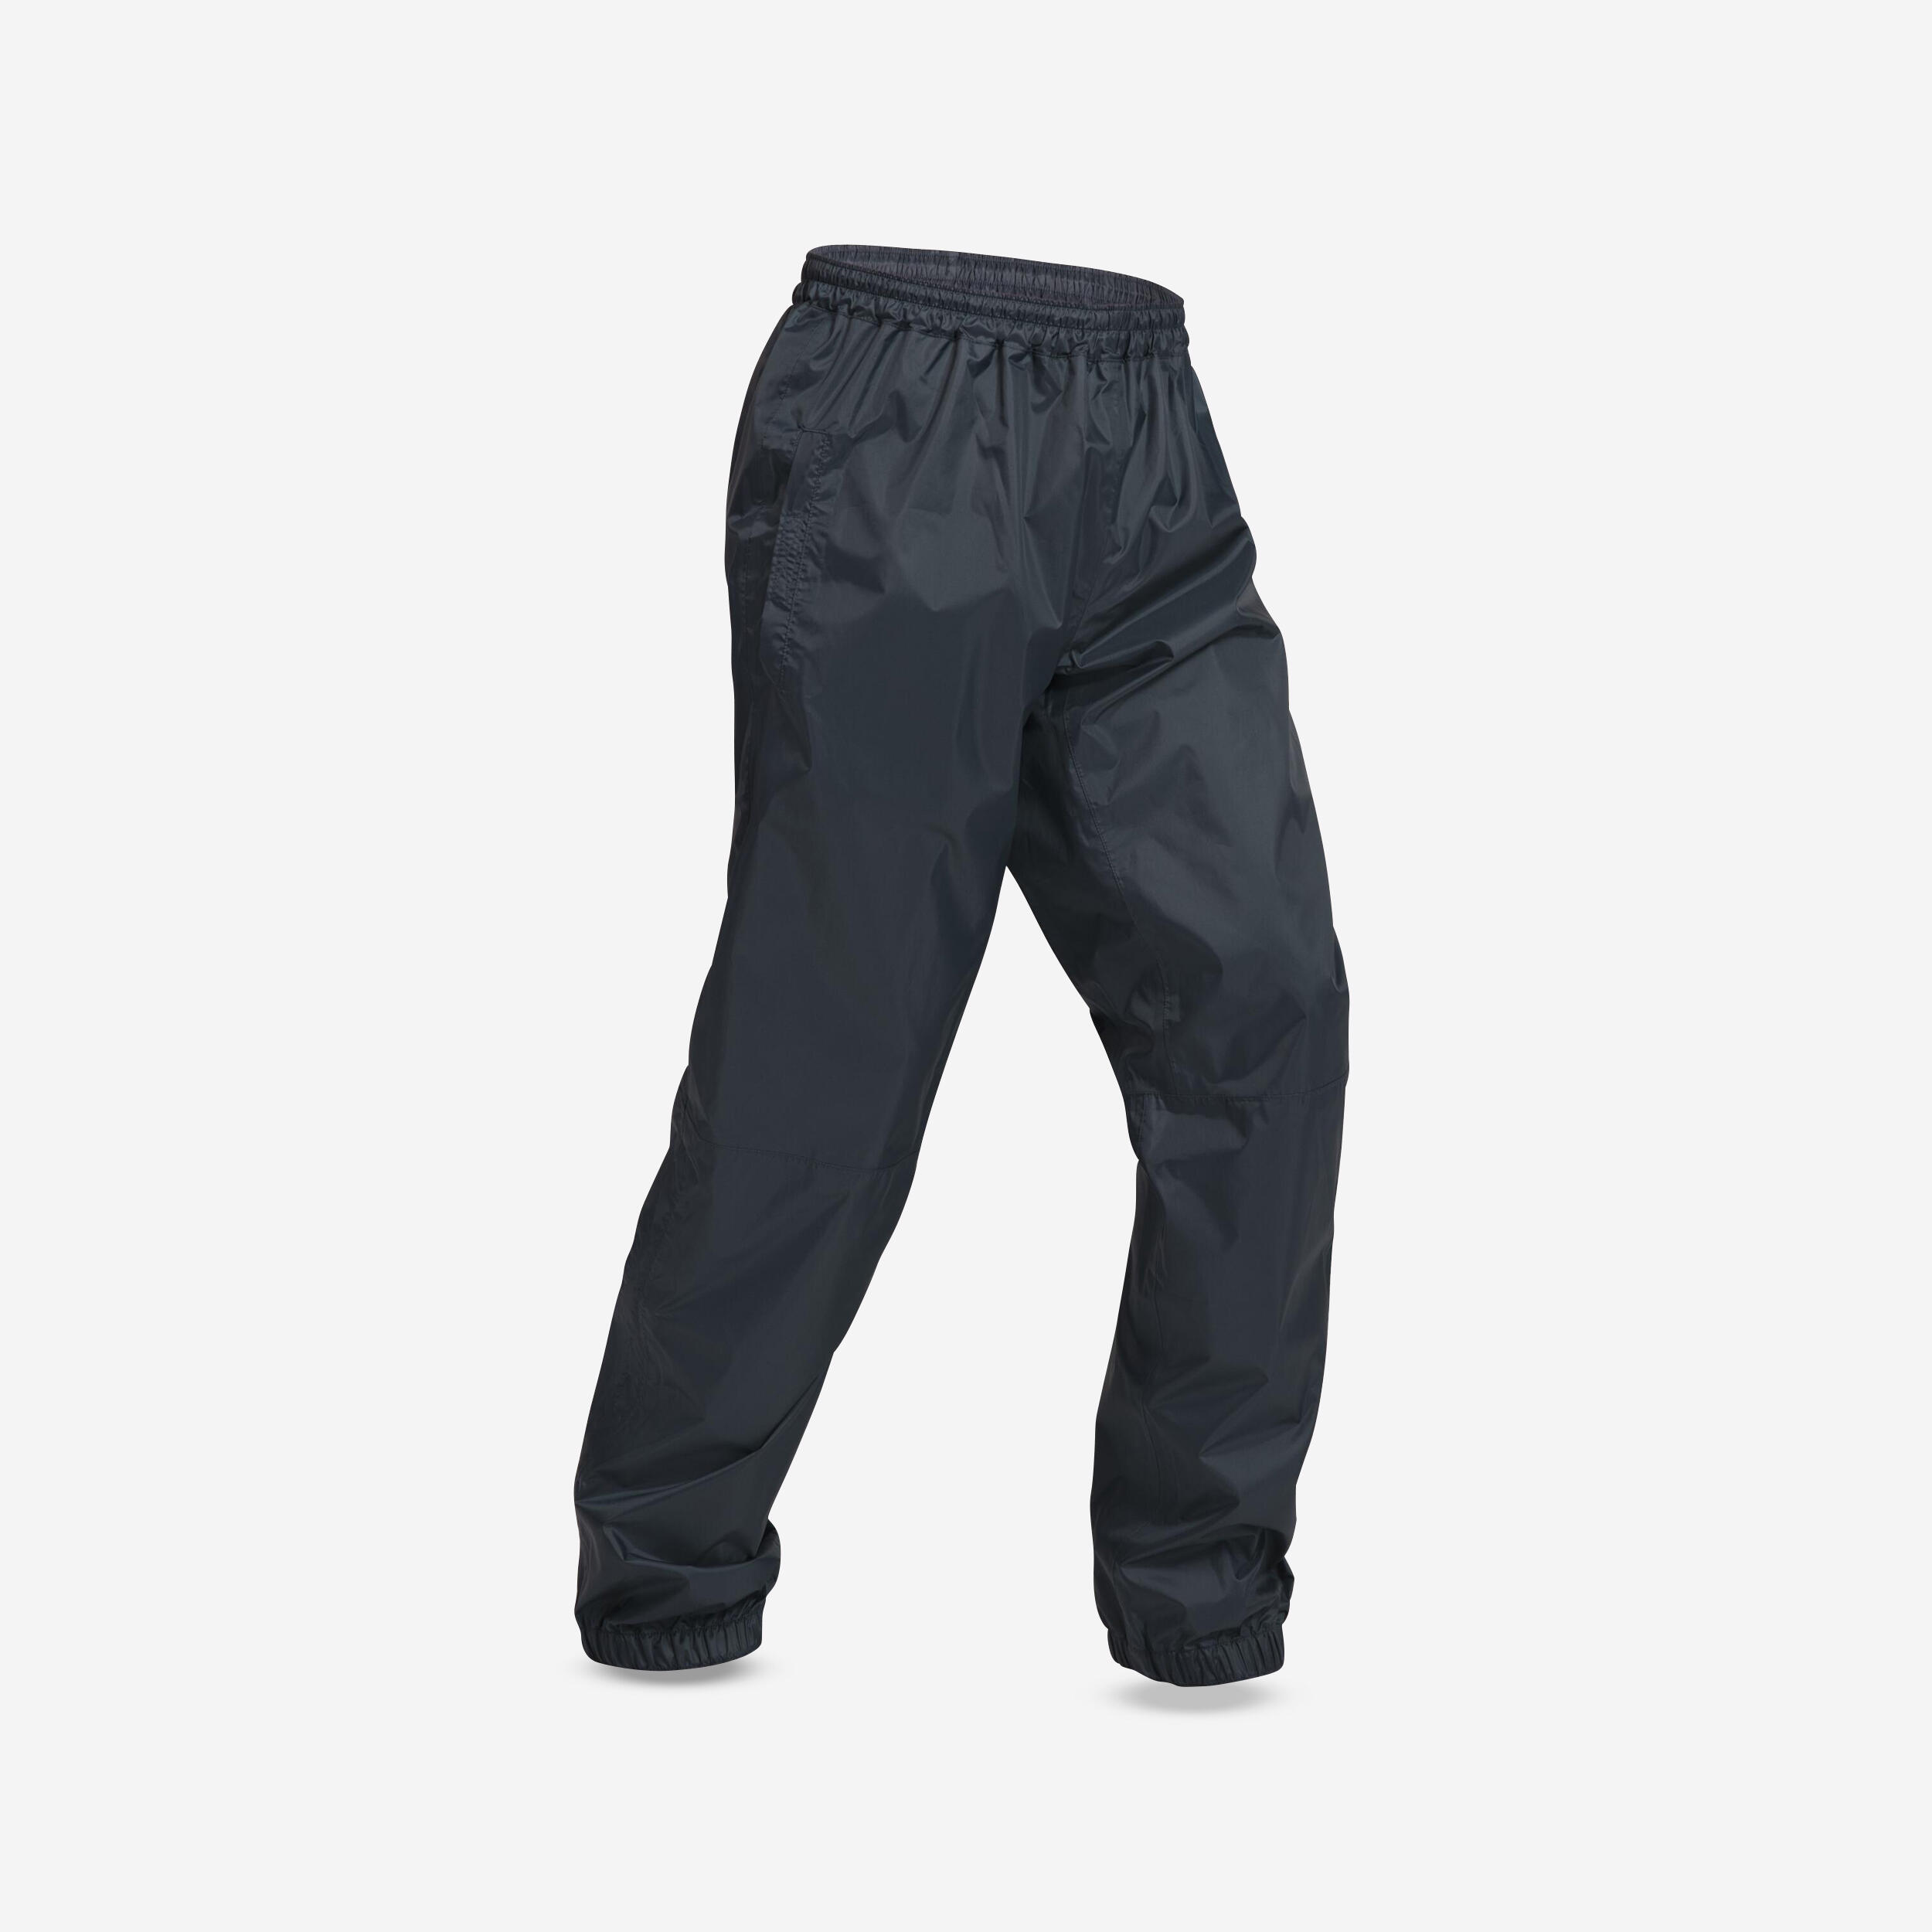 Waterproof Pants: Do You Need Them?